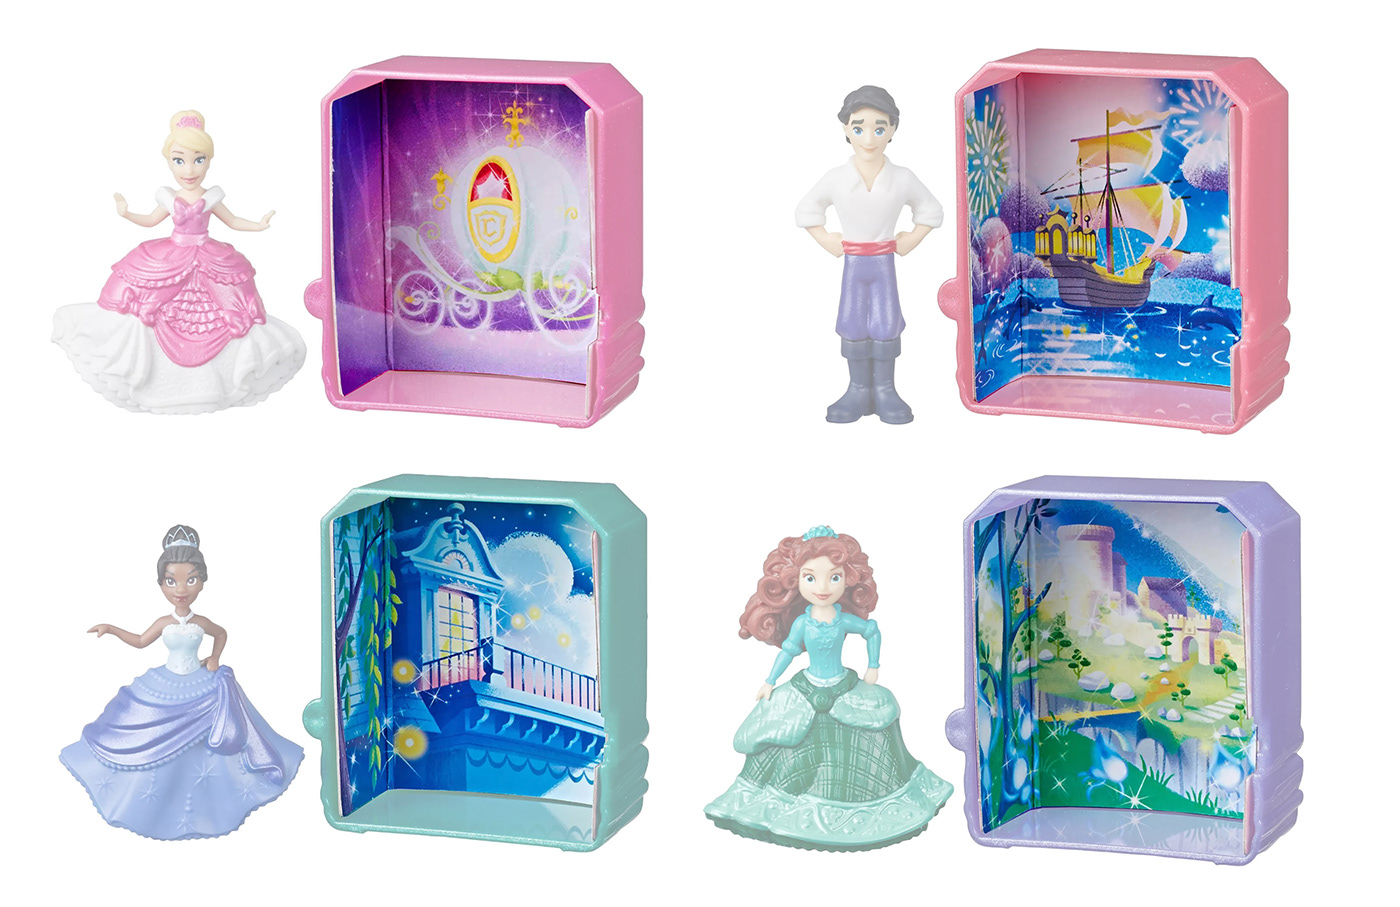 Hasbro plastic product design  toys